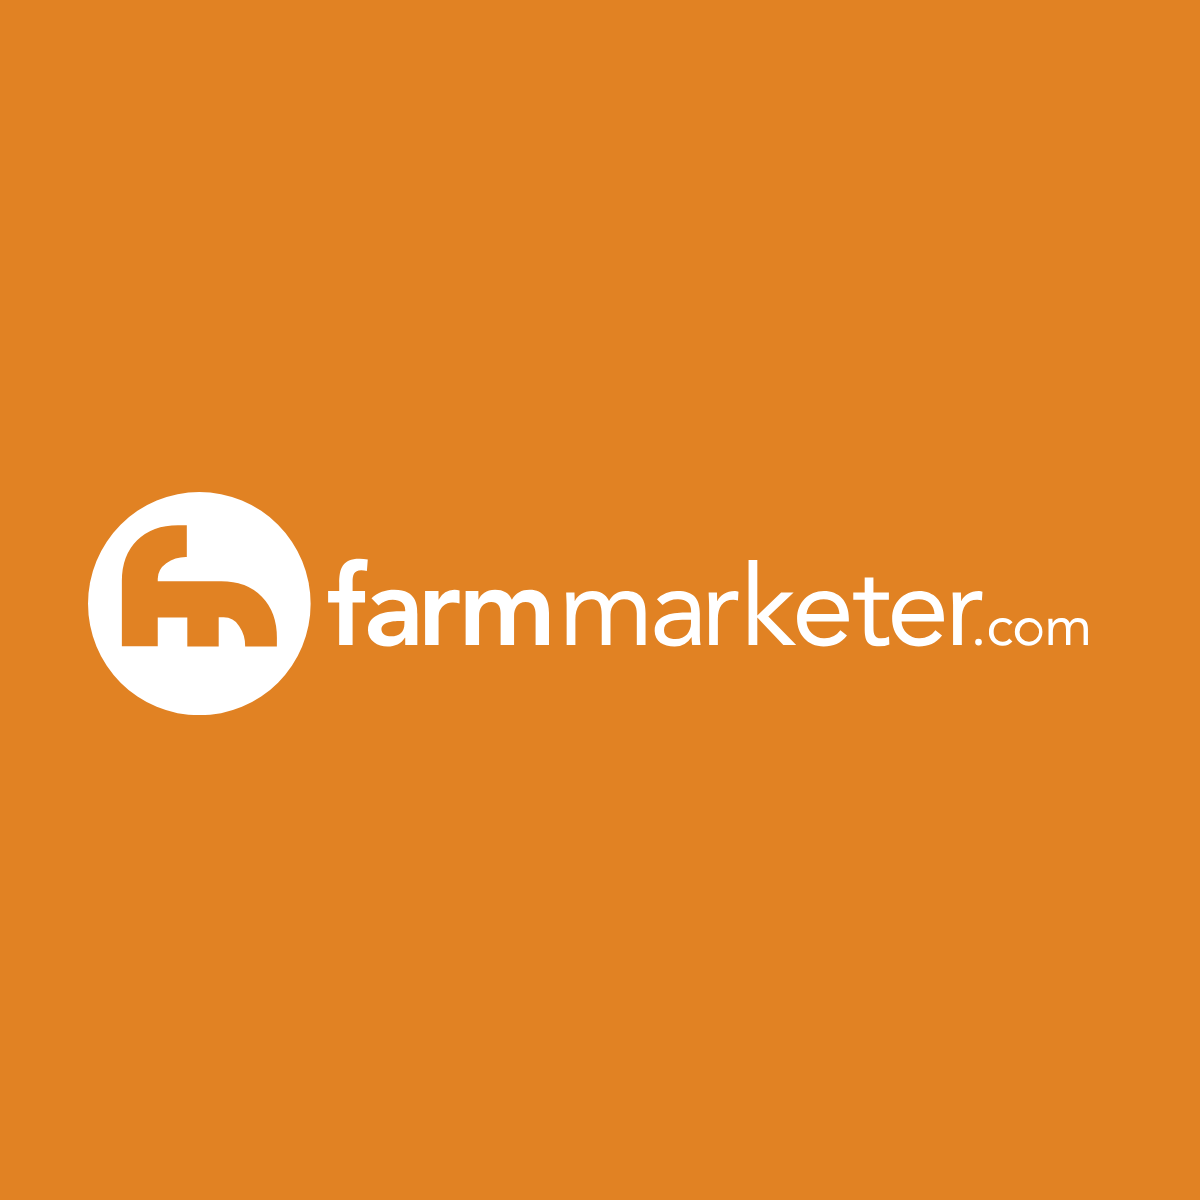 www.farmmarketer.com